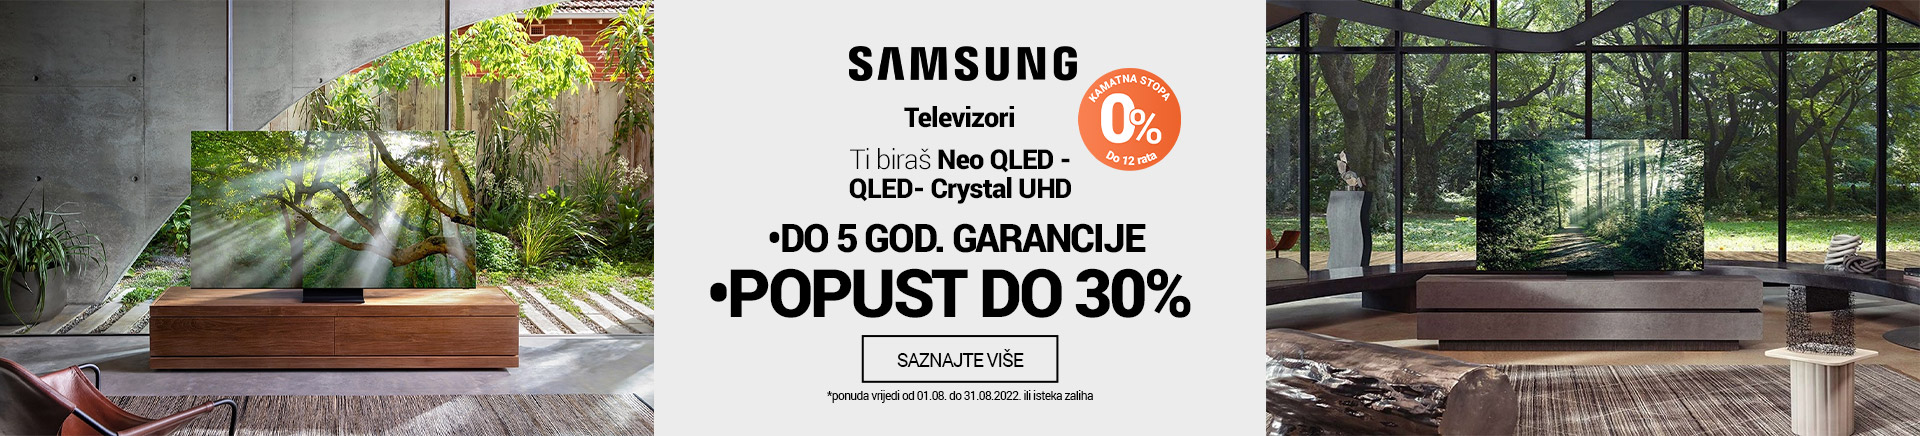 BA Samsung televizori TV Neo QLED MOBILE 380 X 436.jpg